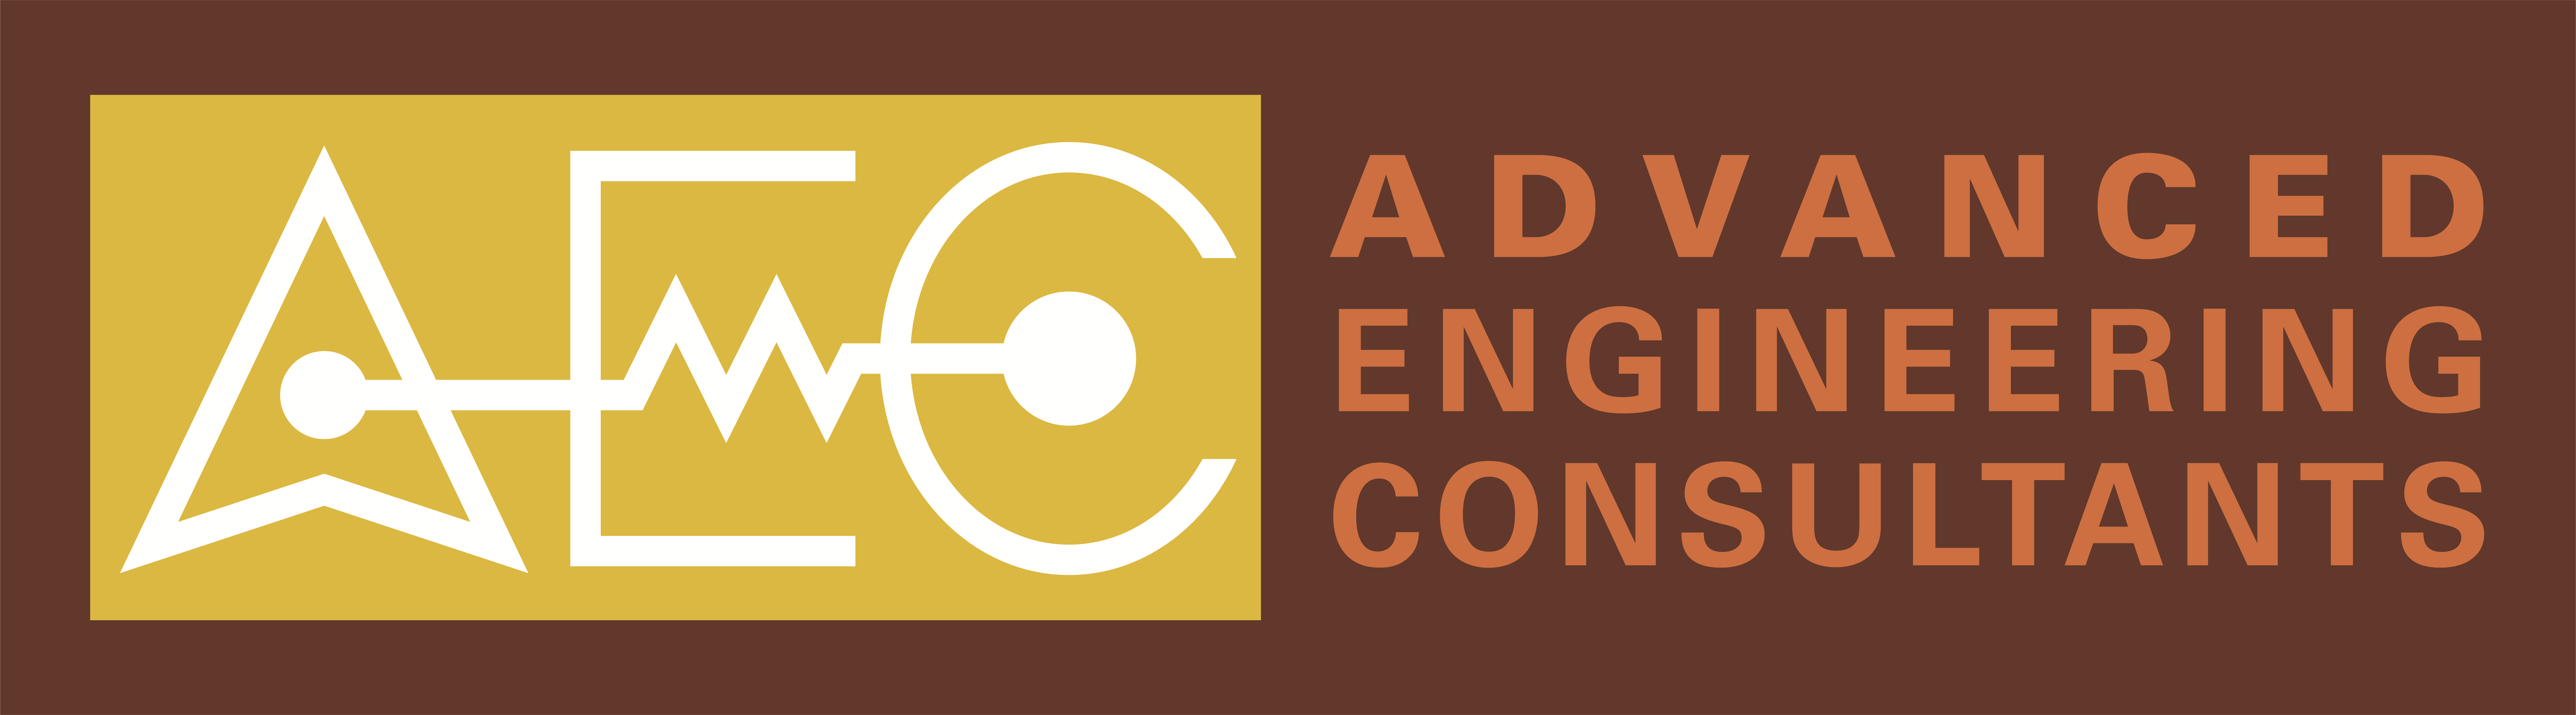 Advanced Engineering Consultants logo